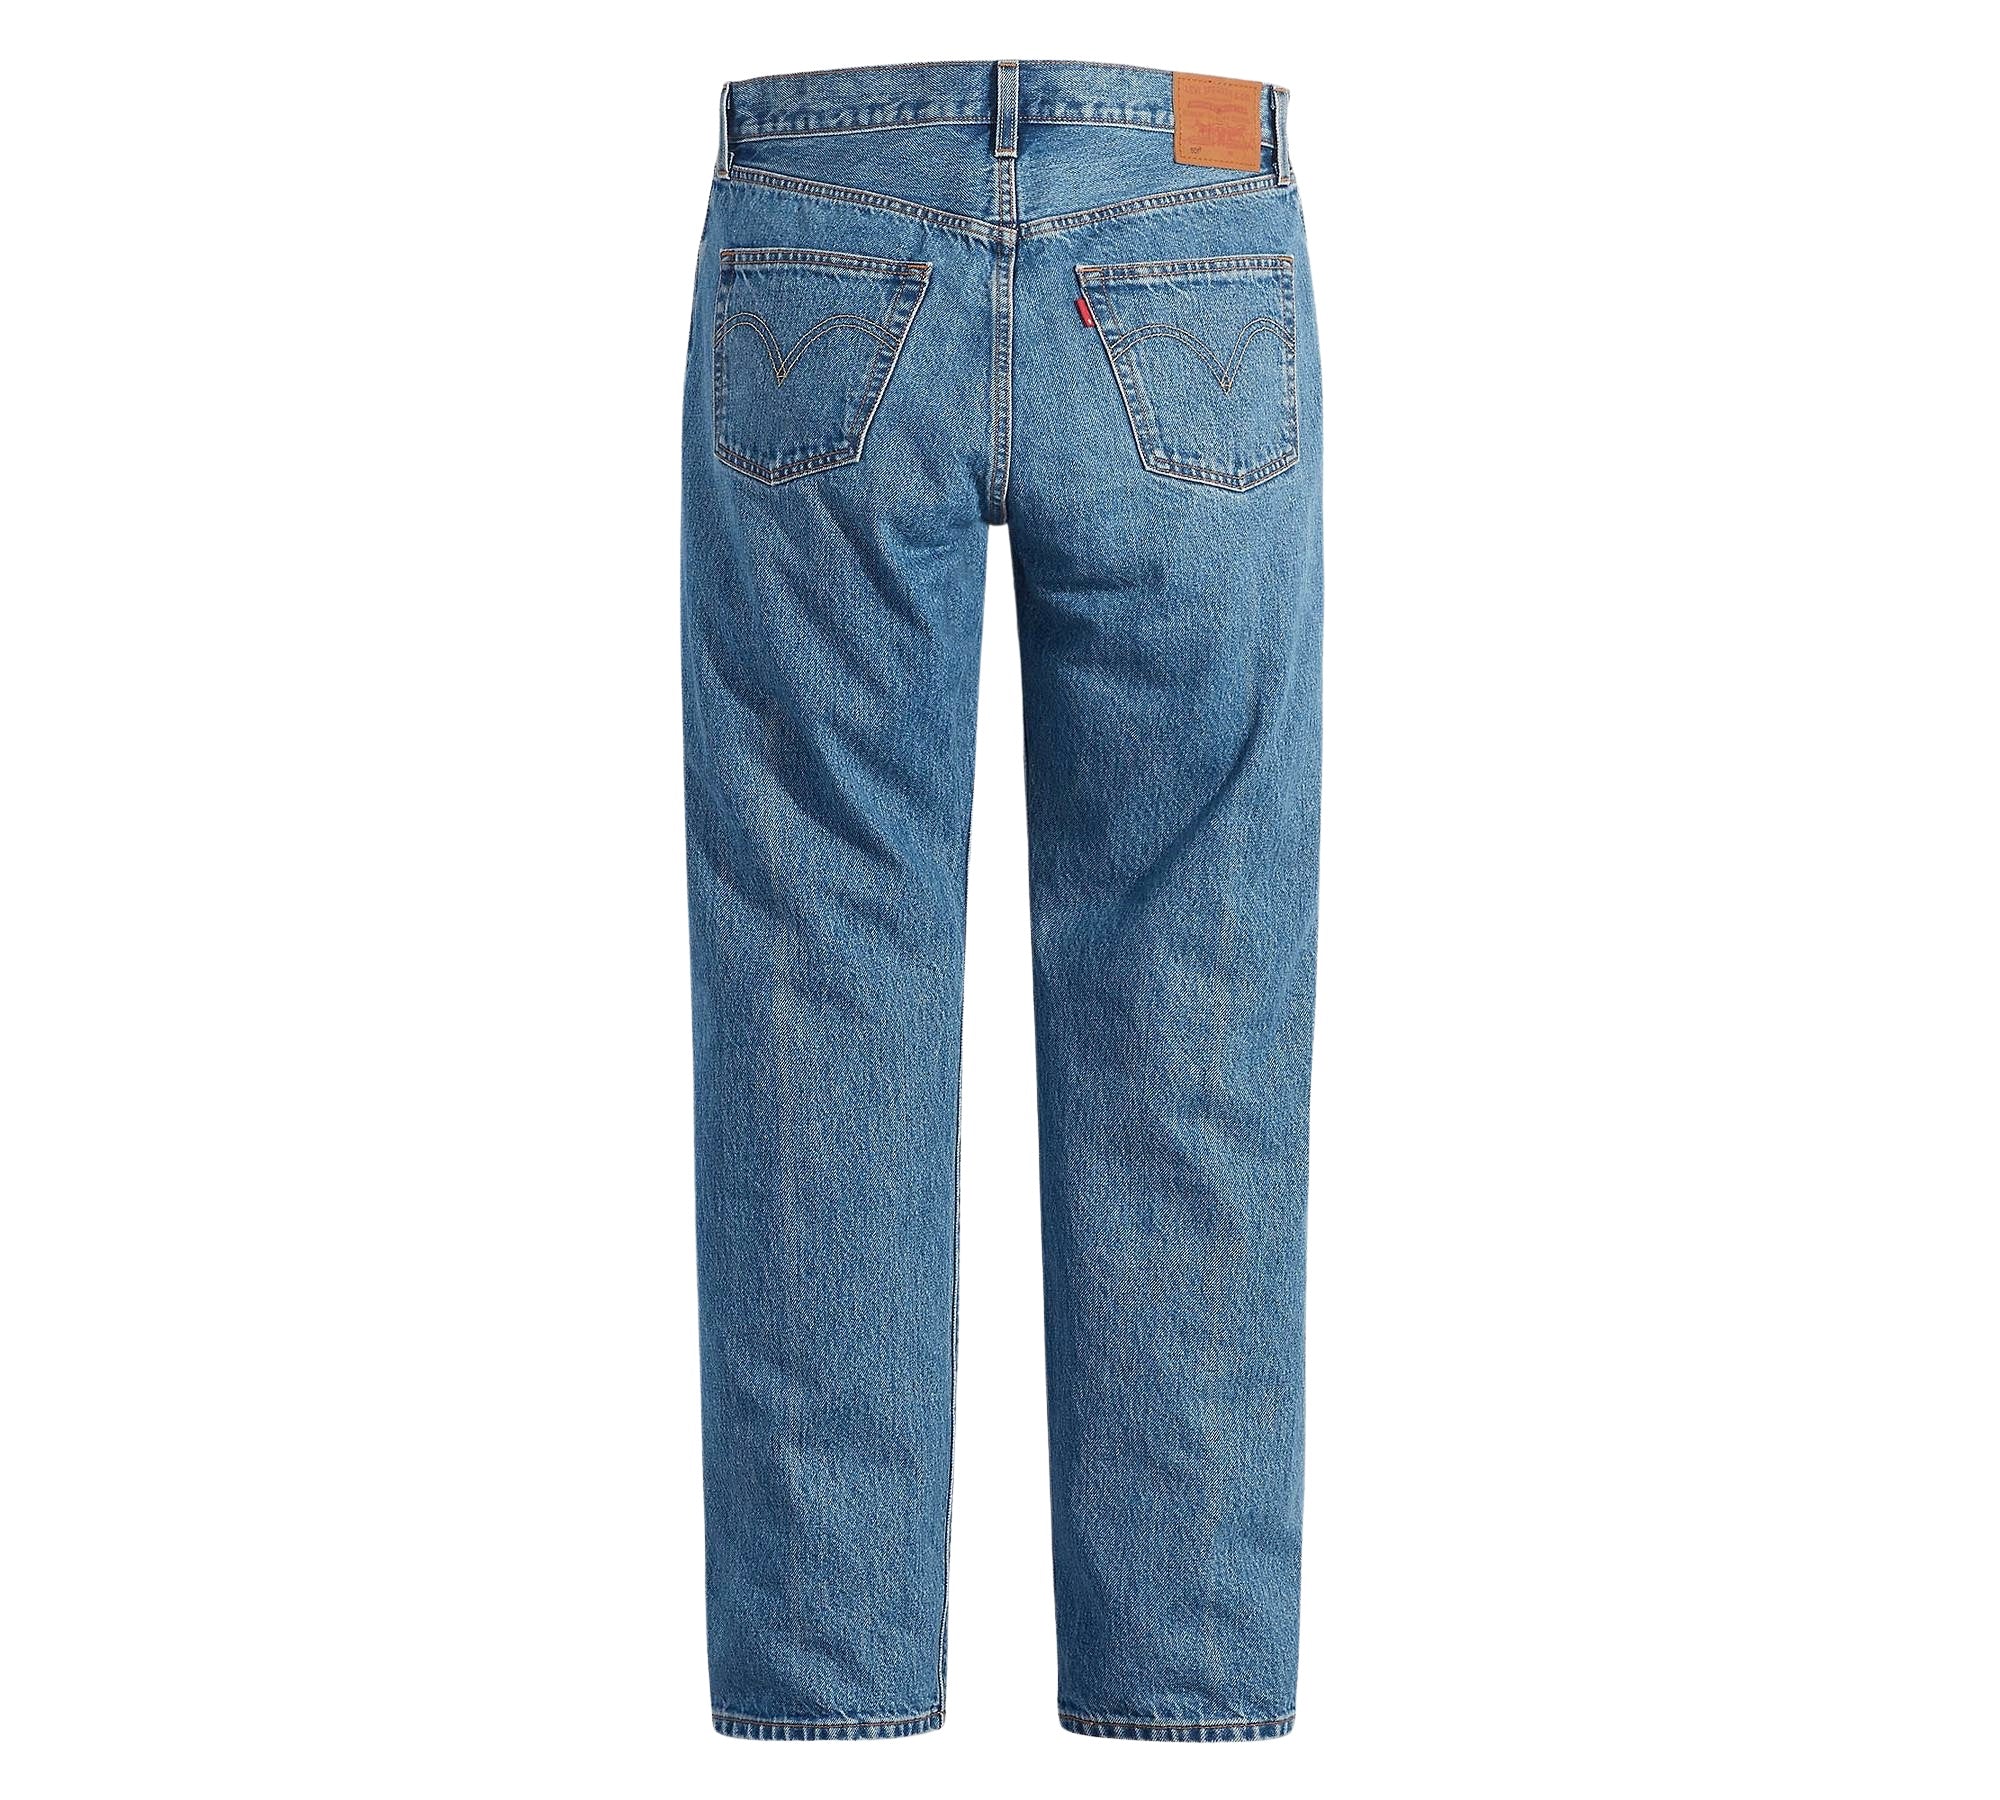 4 Pack - Vintage LEVI'S Classic Blue Zip Fly Jeans - Waist 34 - Length 34 - Vintage Superstore Online